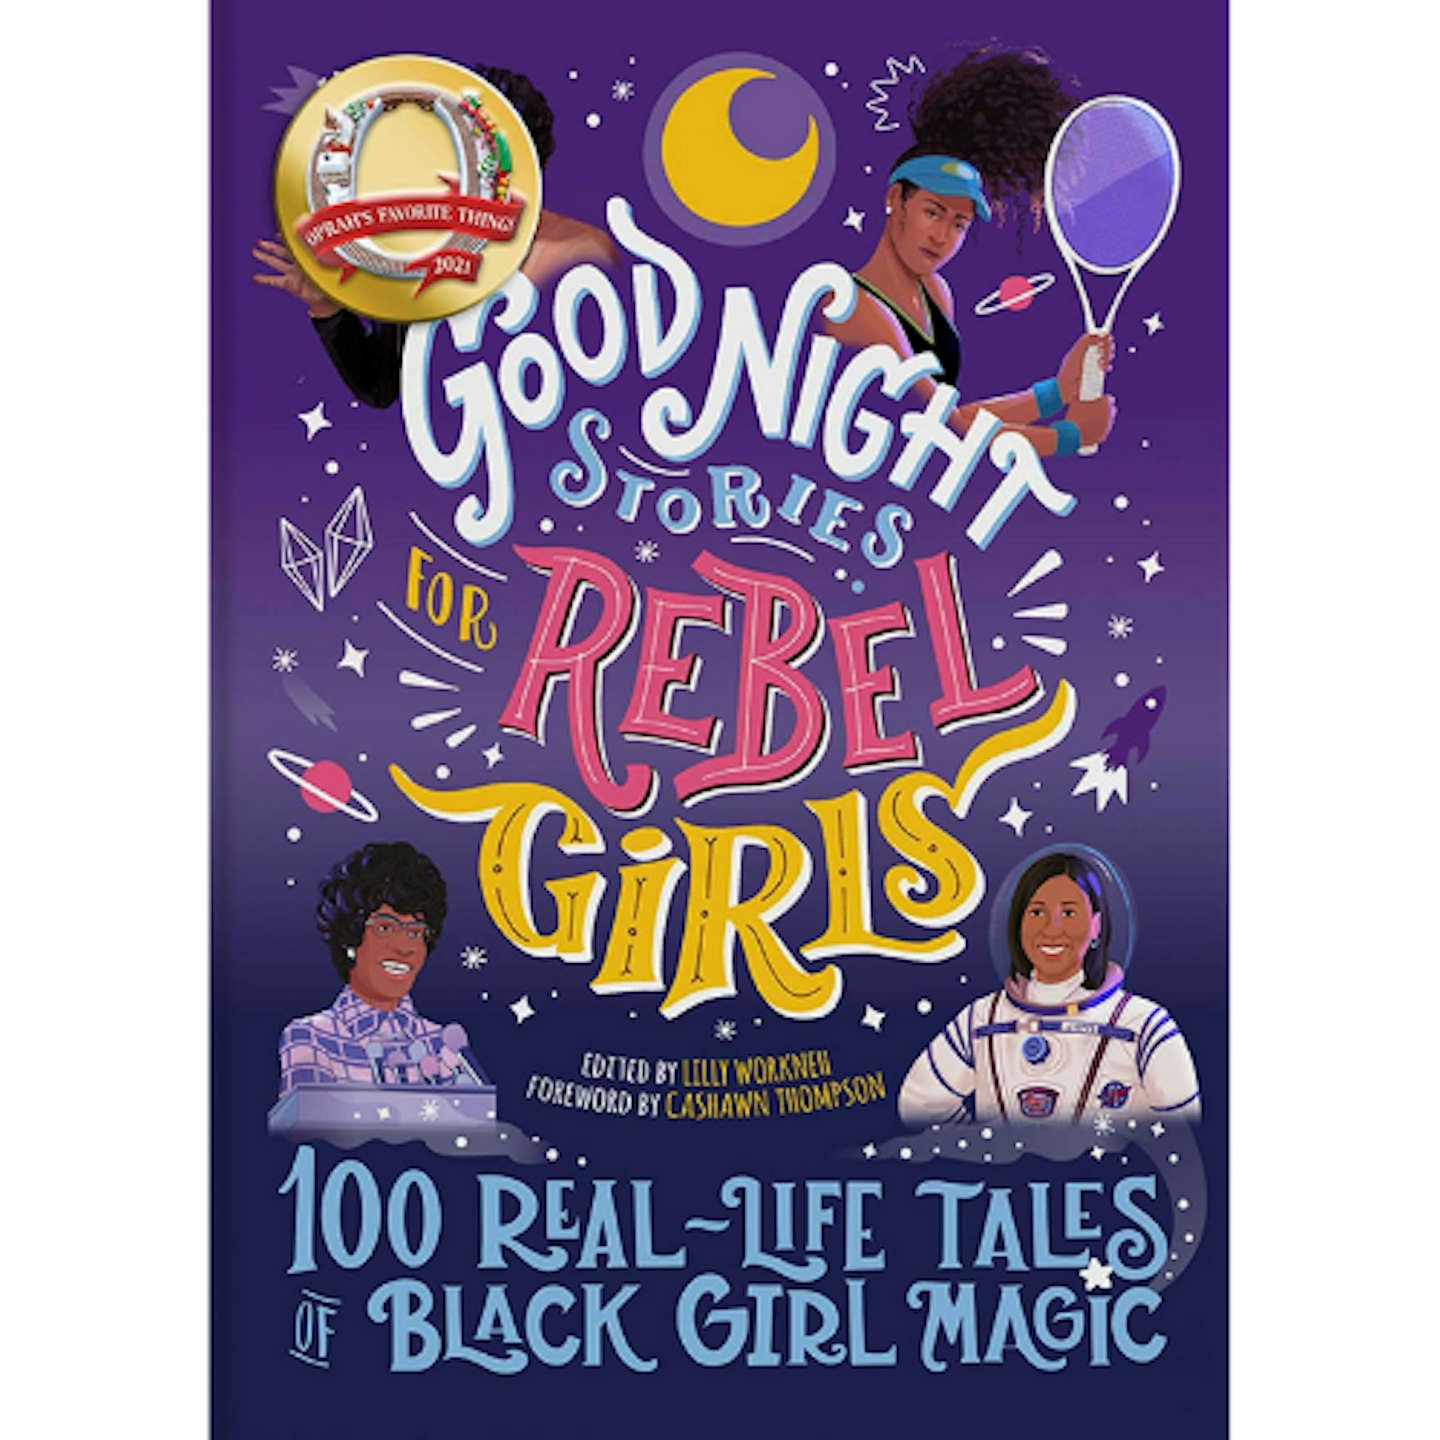 Good Night Stories for Rebel Girls Volume 4